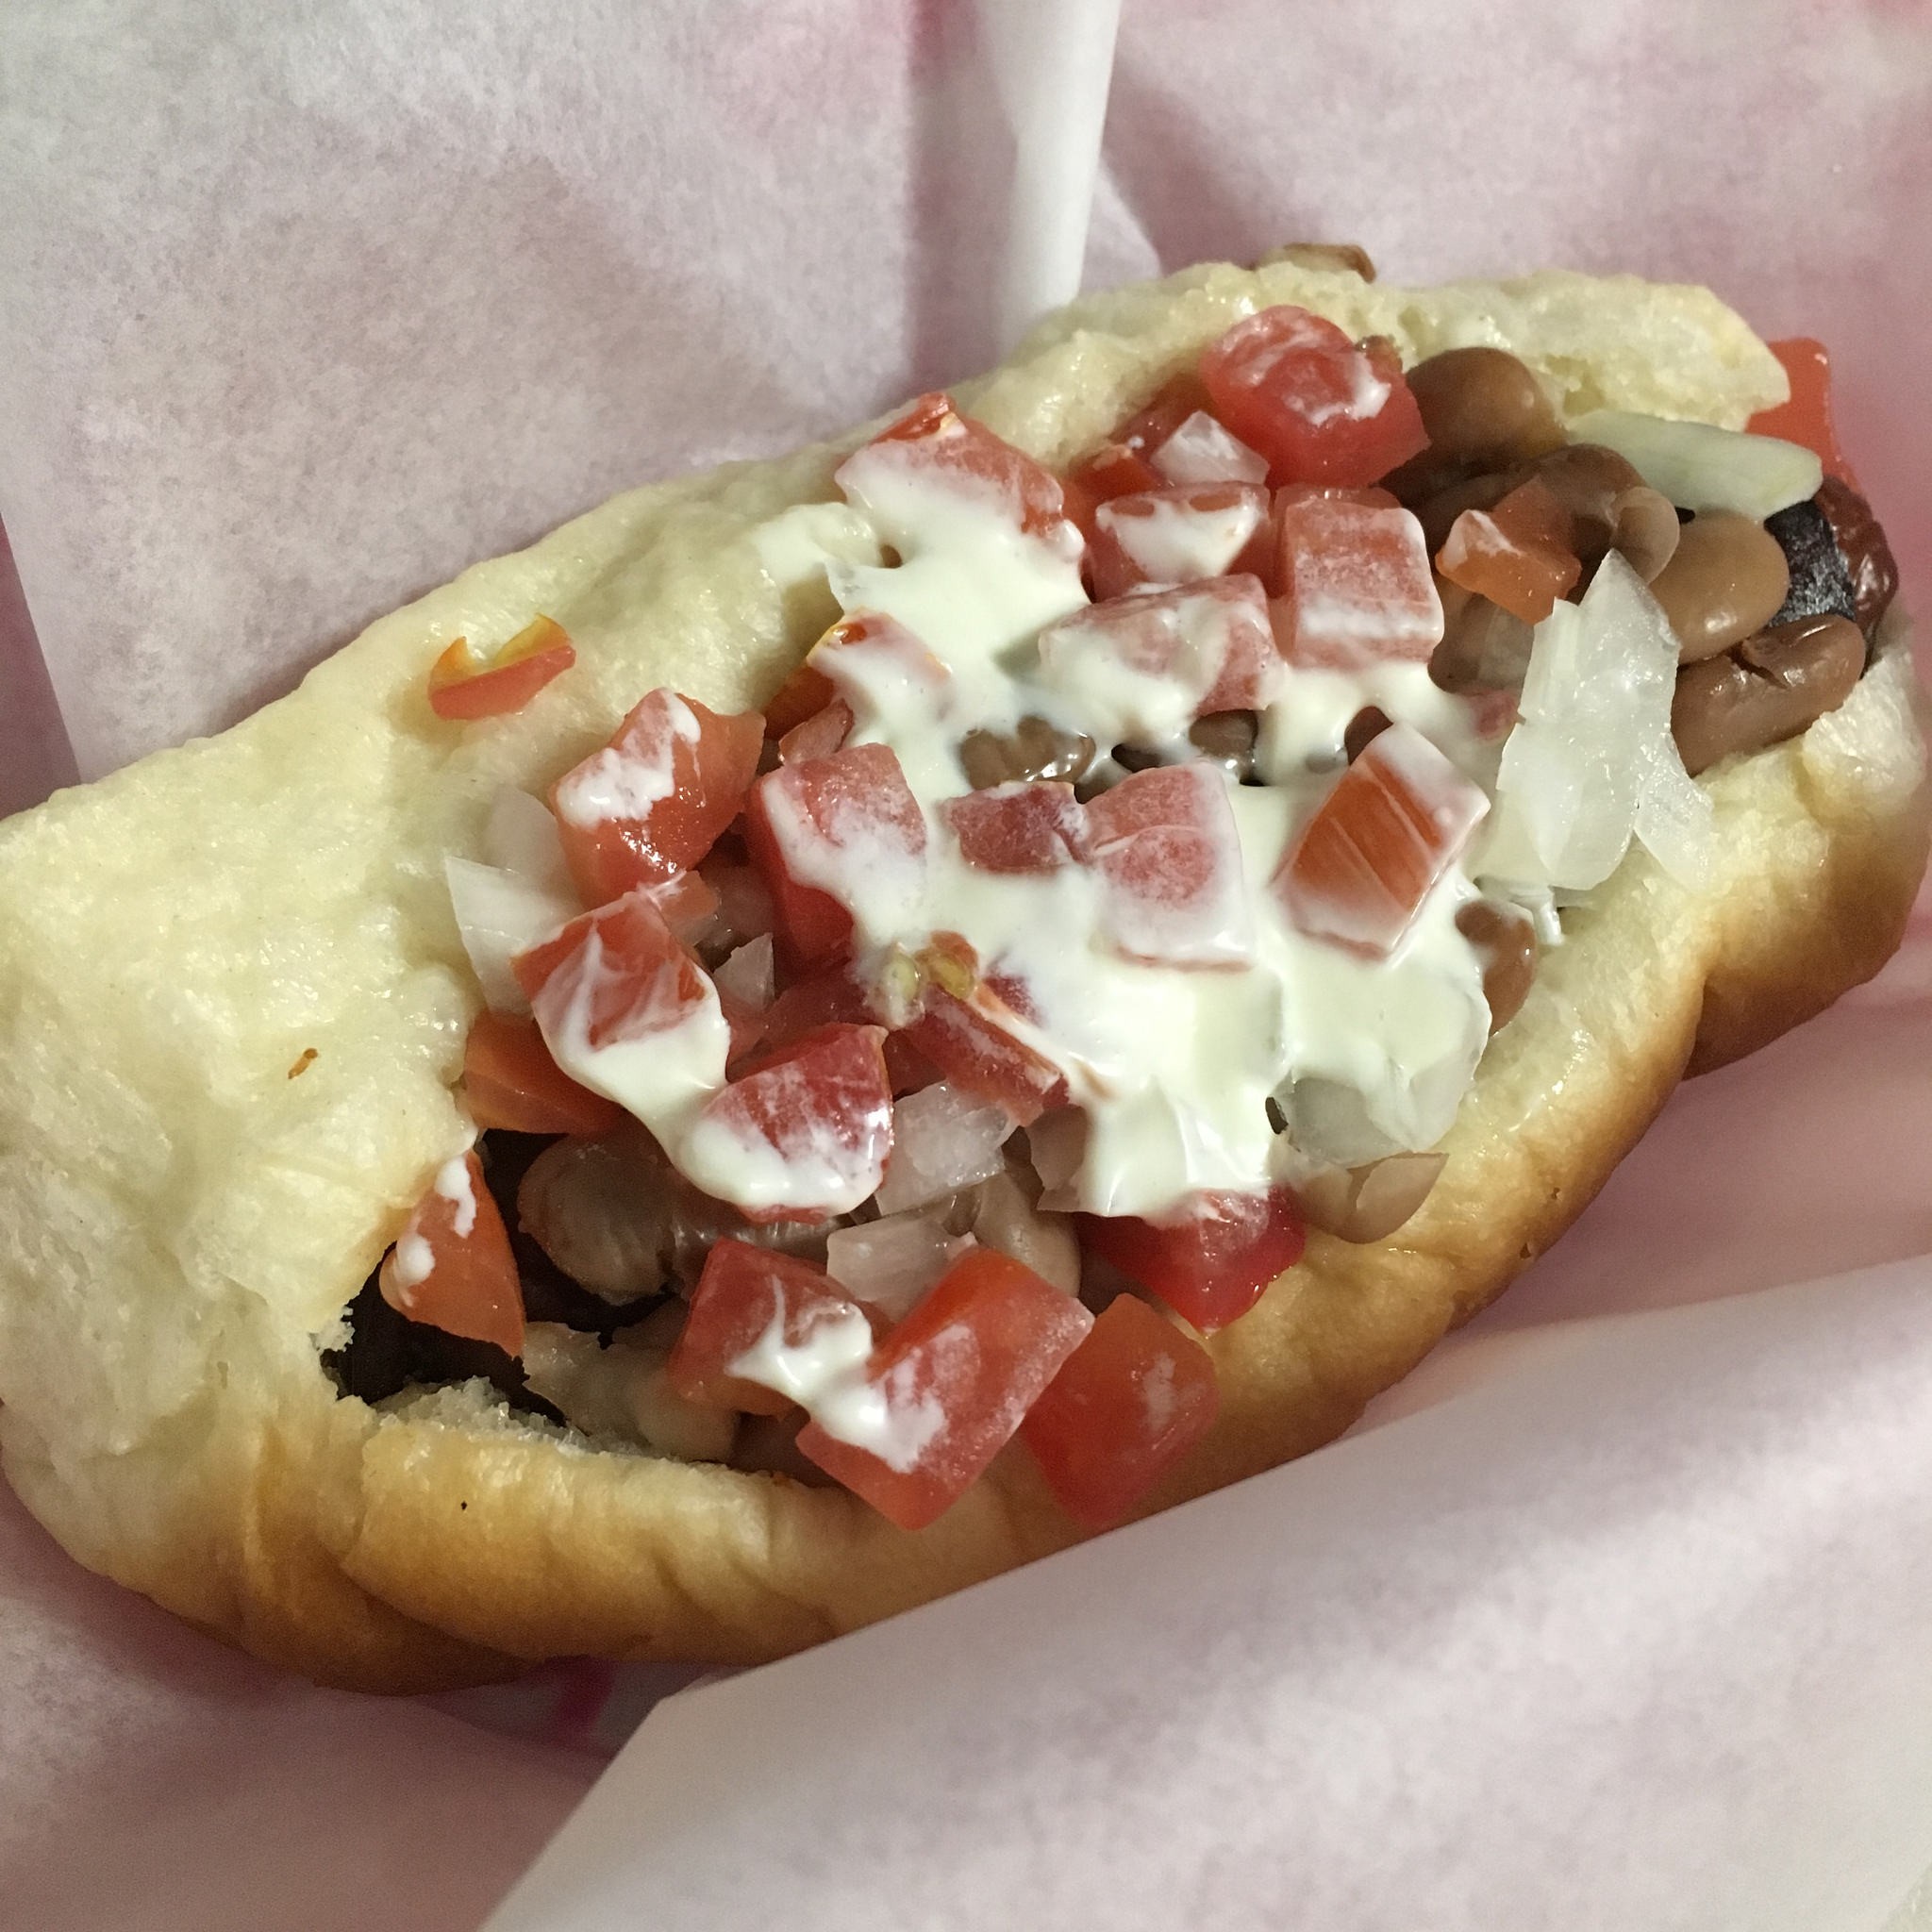 6 Great Sonoran-Style Hot Dogs in Metro Phoenix